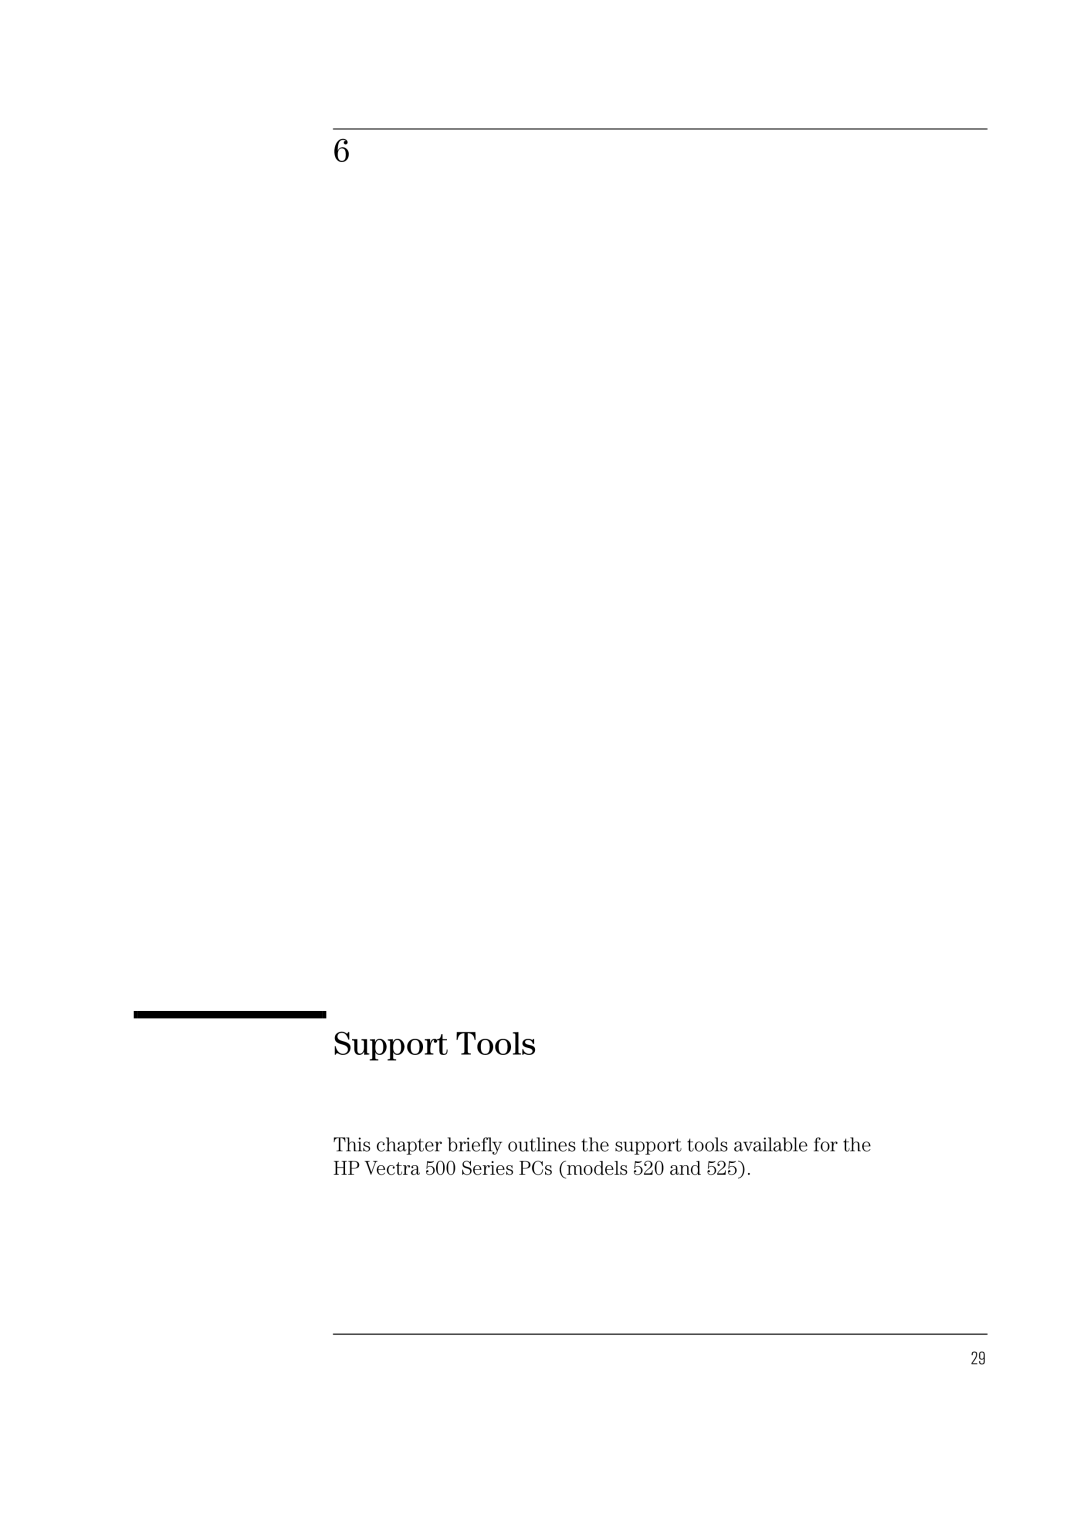 Verbatim 520, 525 manual Support Tools 